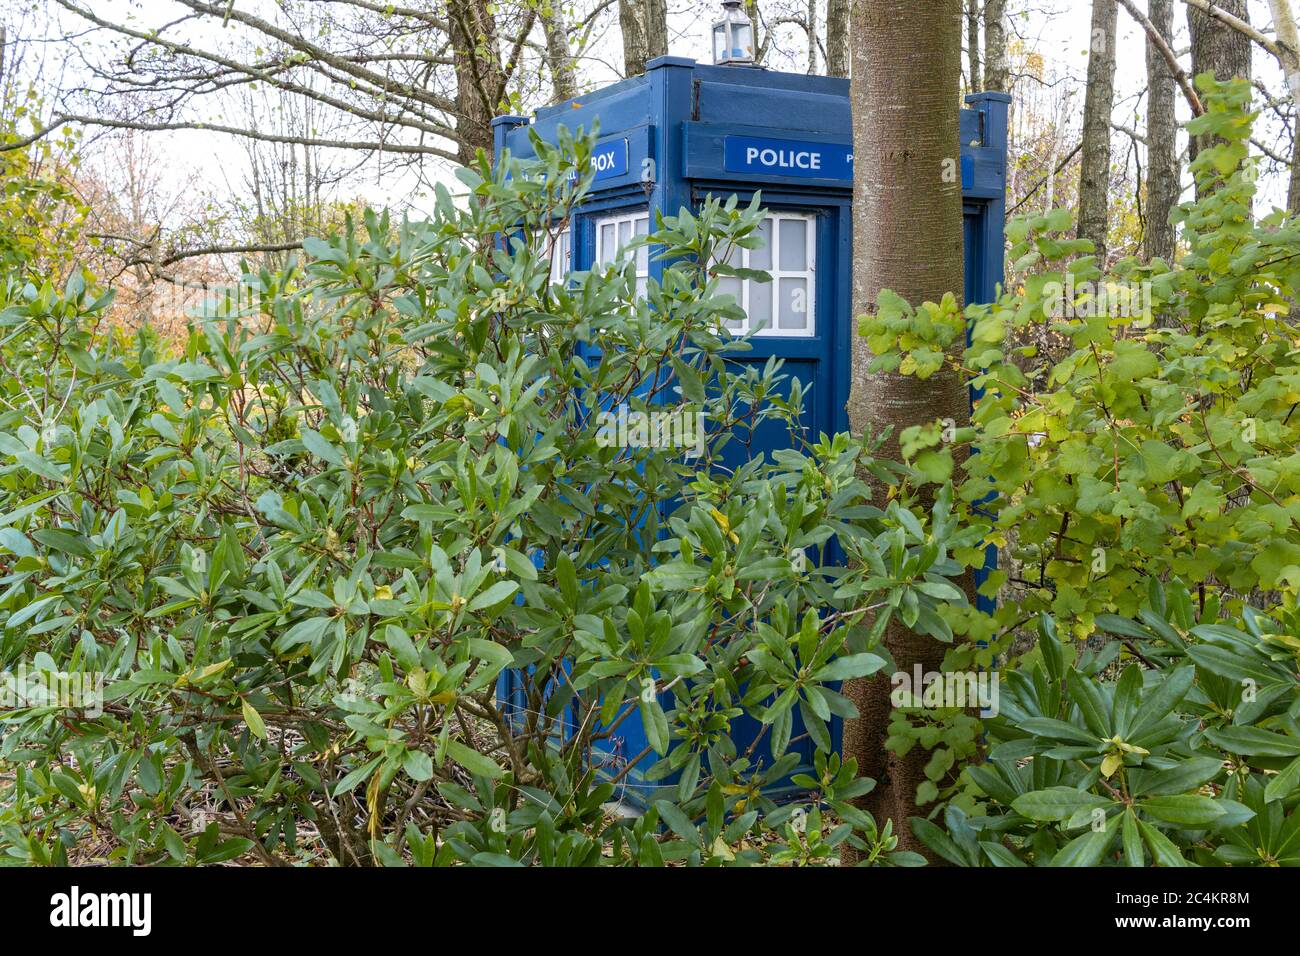 Doctor Who's tardis police box Stock Photo